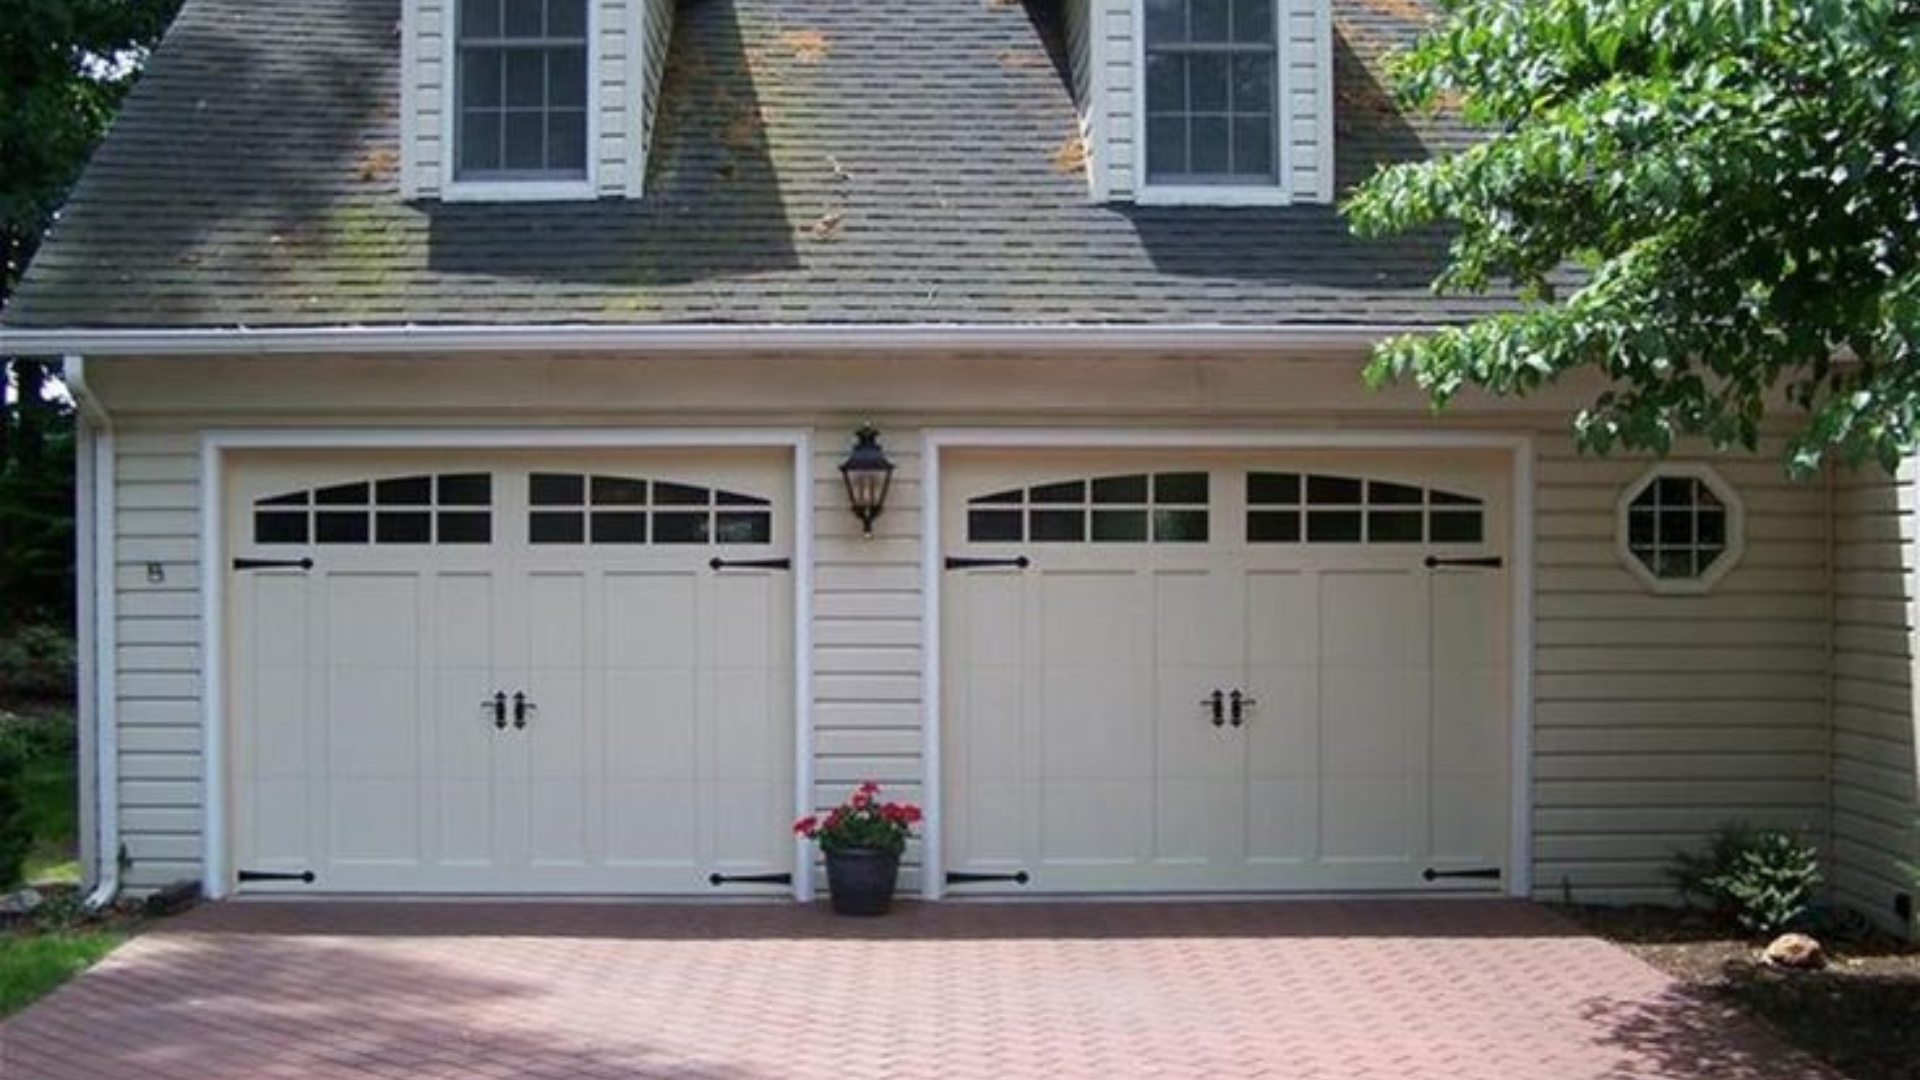 A garage door with decorative hardware installed